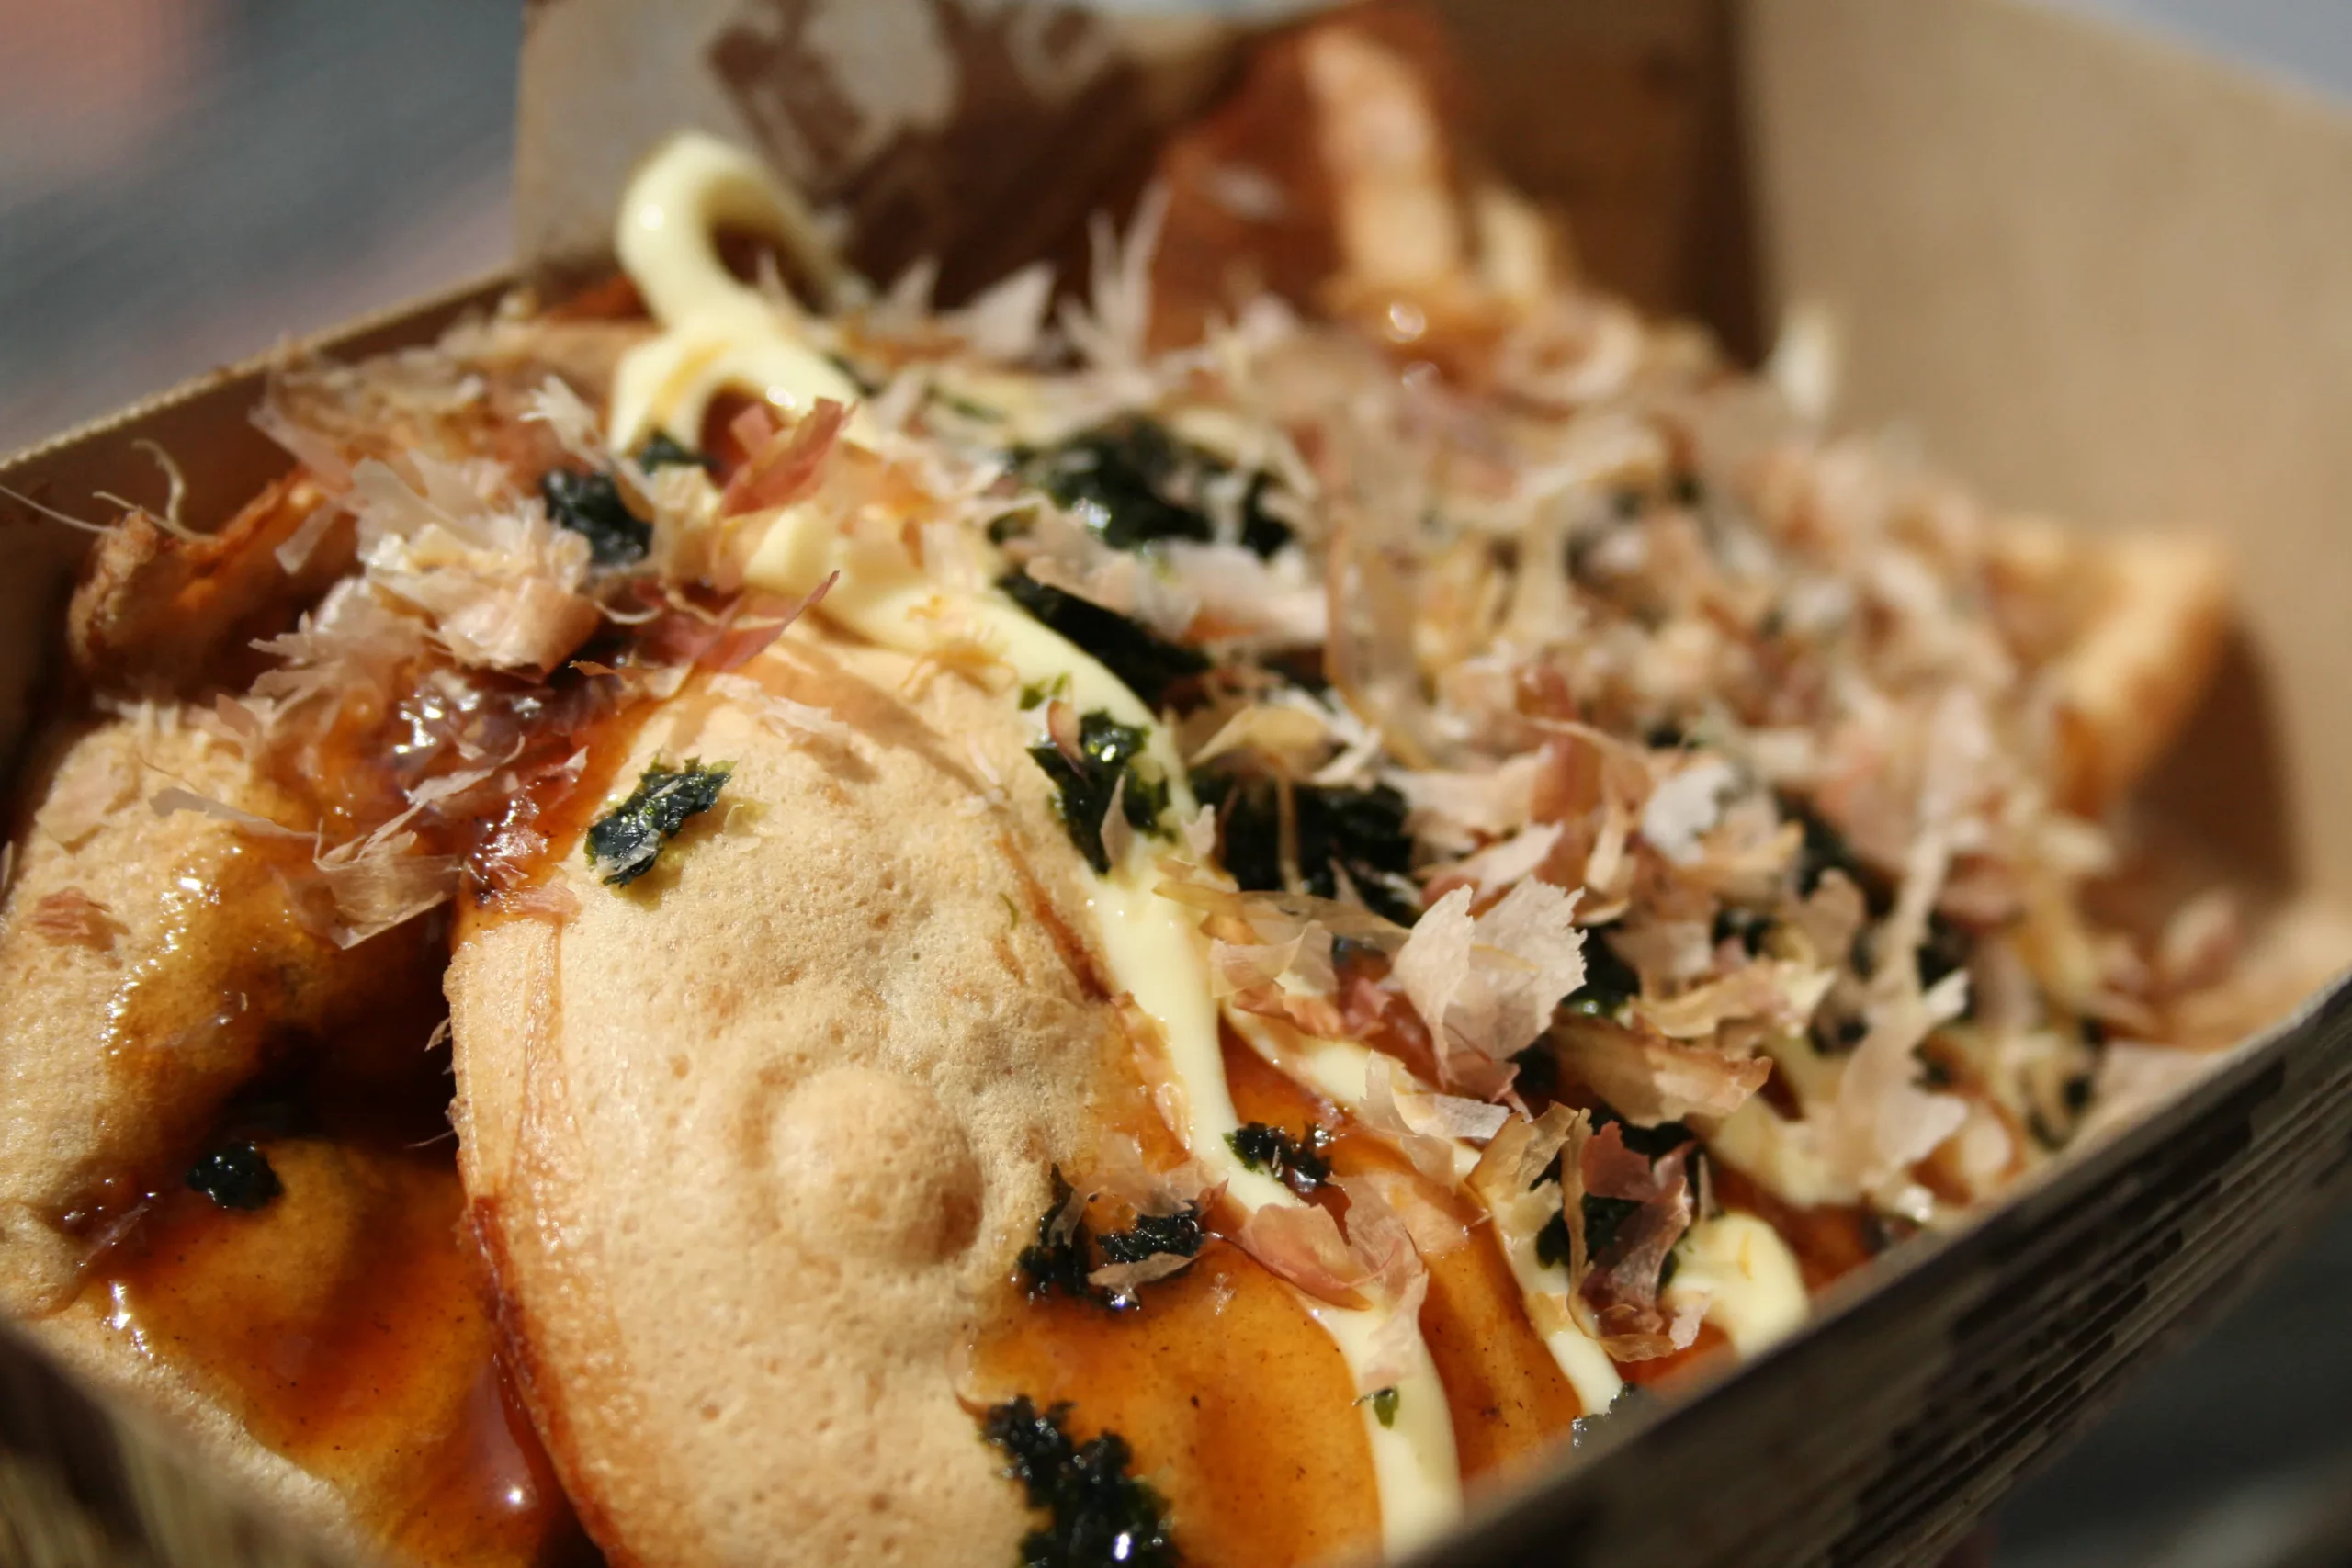 Taiyaki VS. Takoyaki: The Great Street Snack Debate